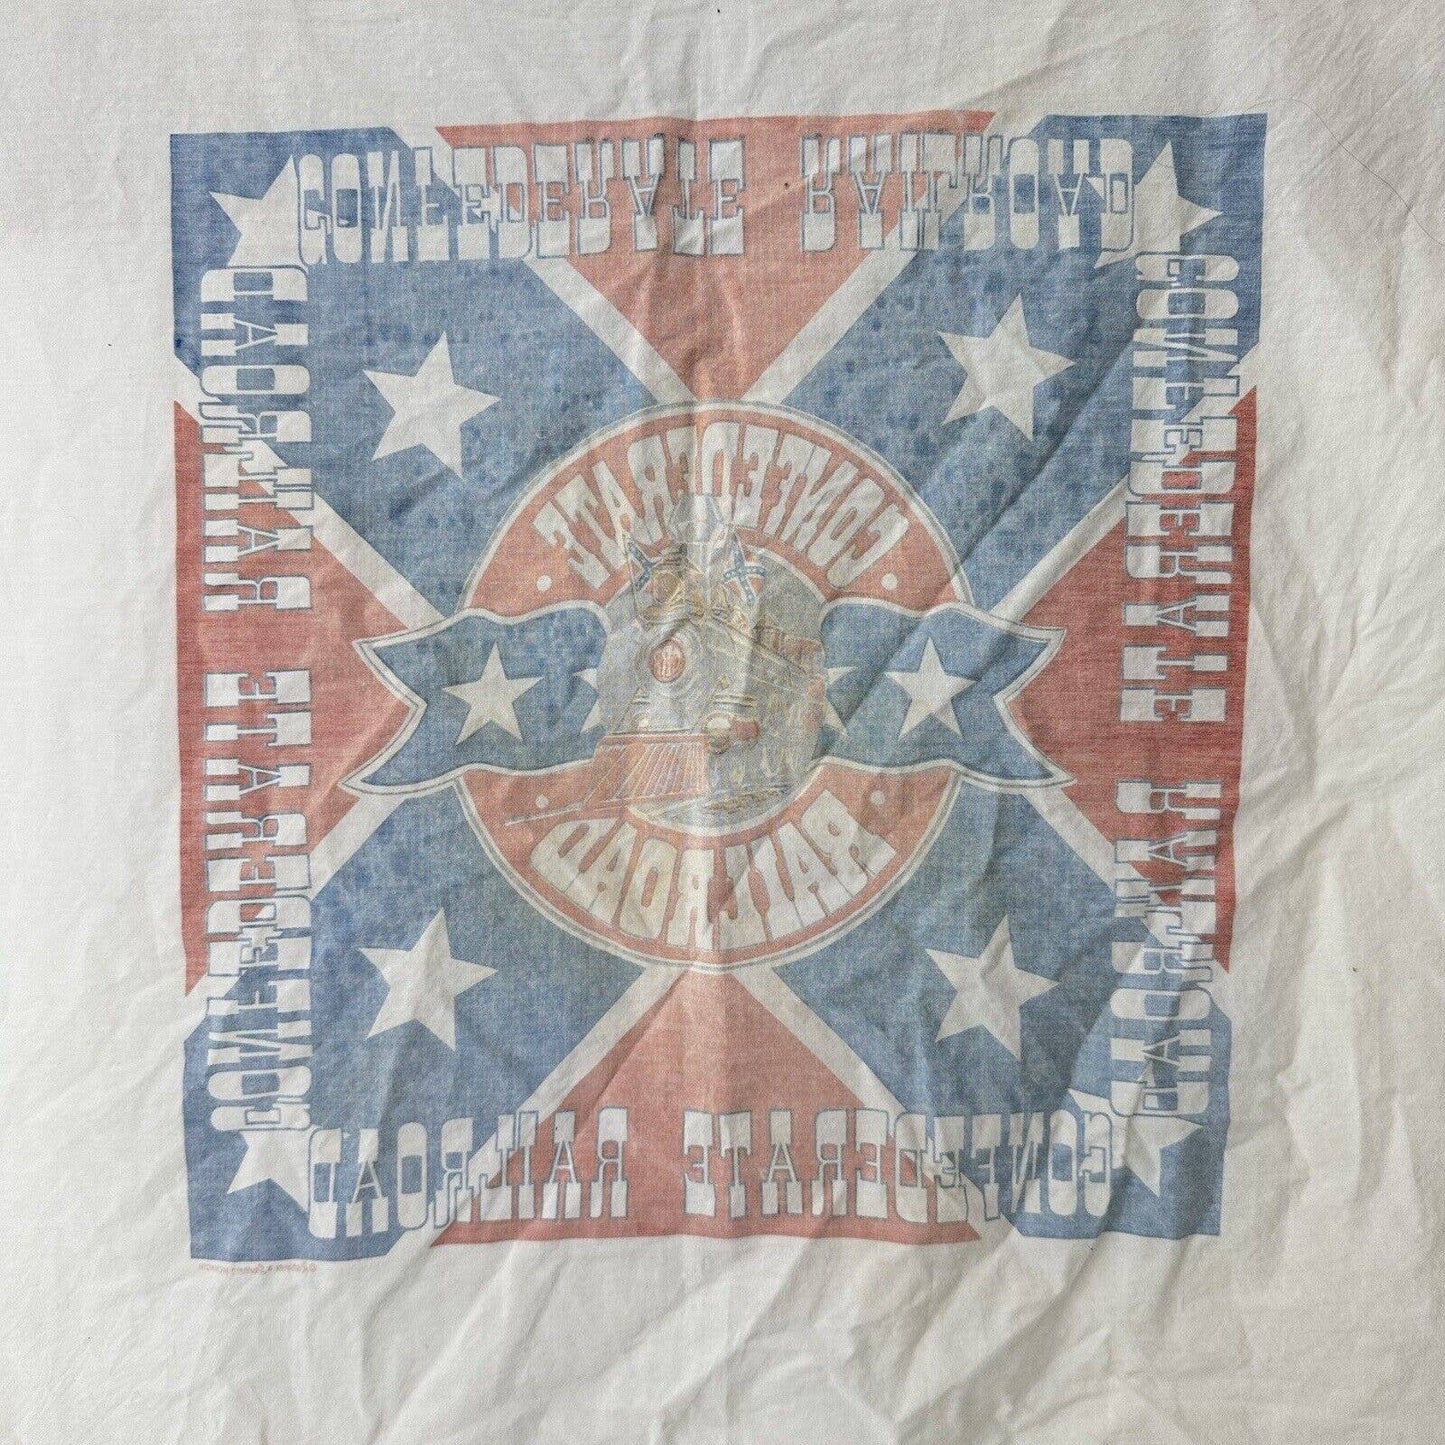 Confederate Railroad 1994 Country Music Tour Bandana / Wall Art